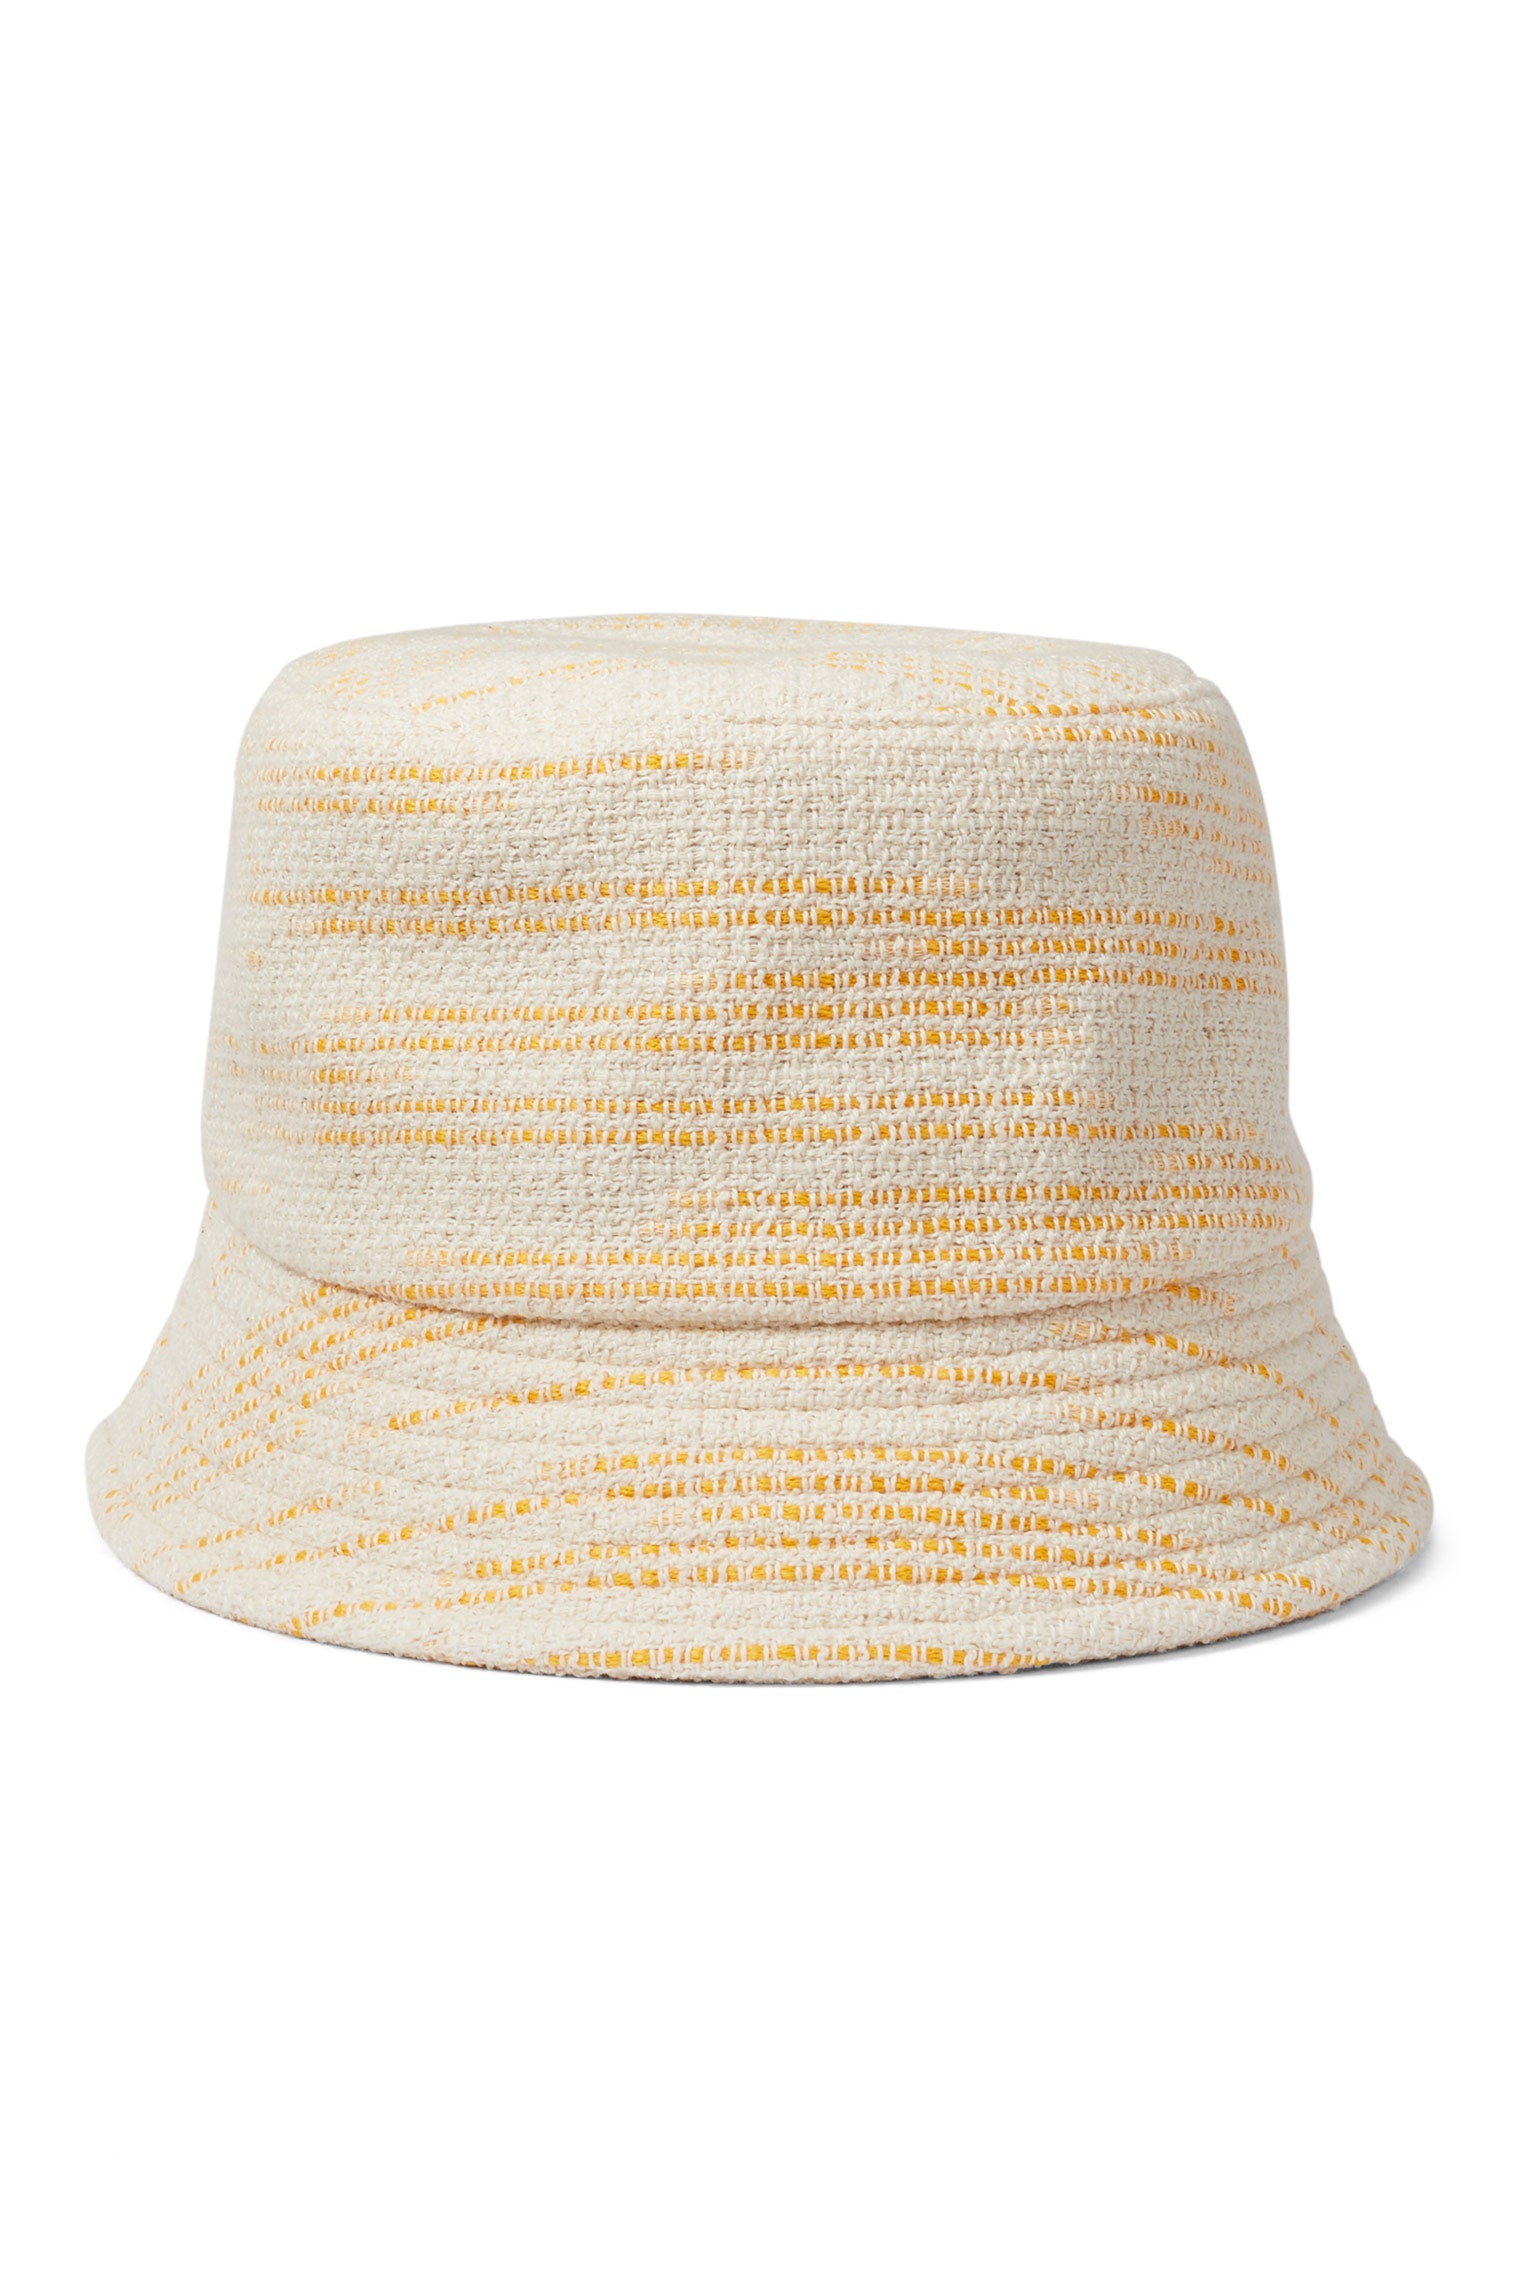 Rye Yellow Bucket Hat - Packable & Rollable Hats - Lock & Co. Hatters London UK